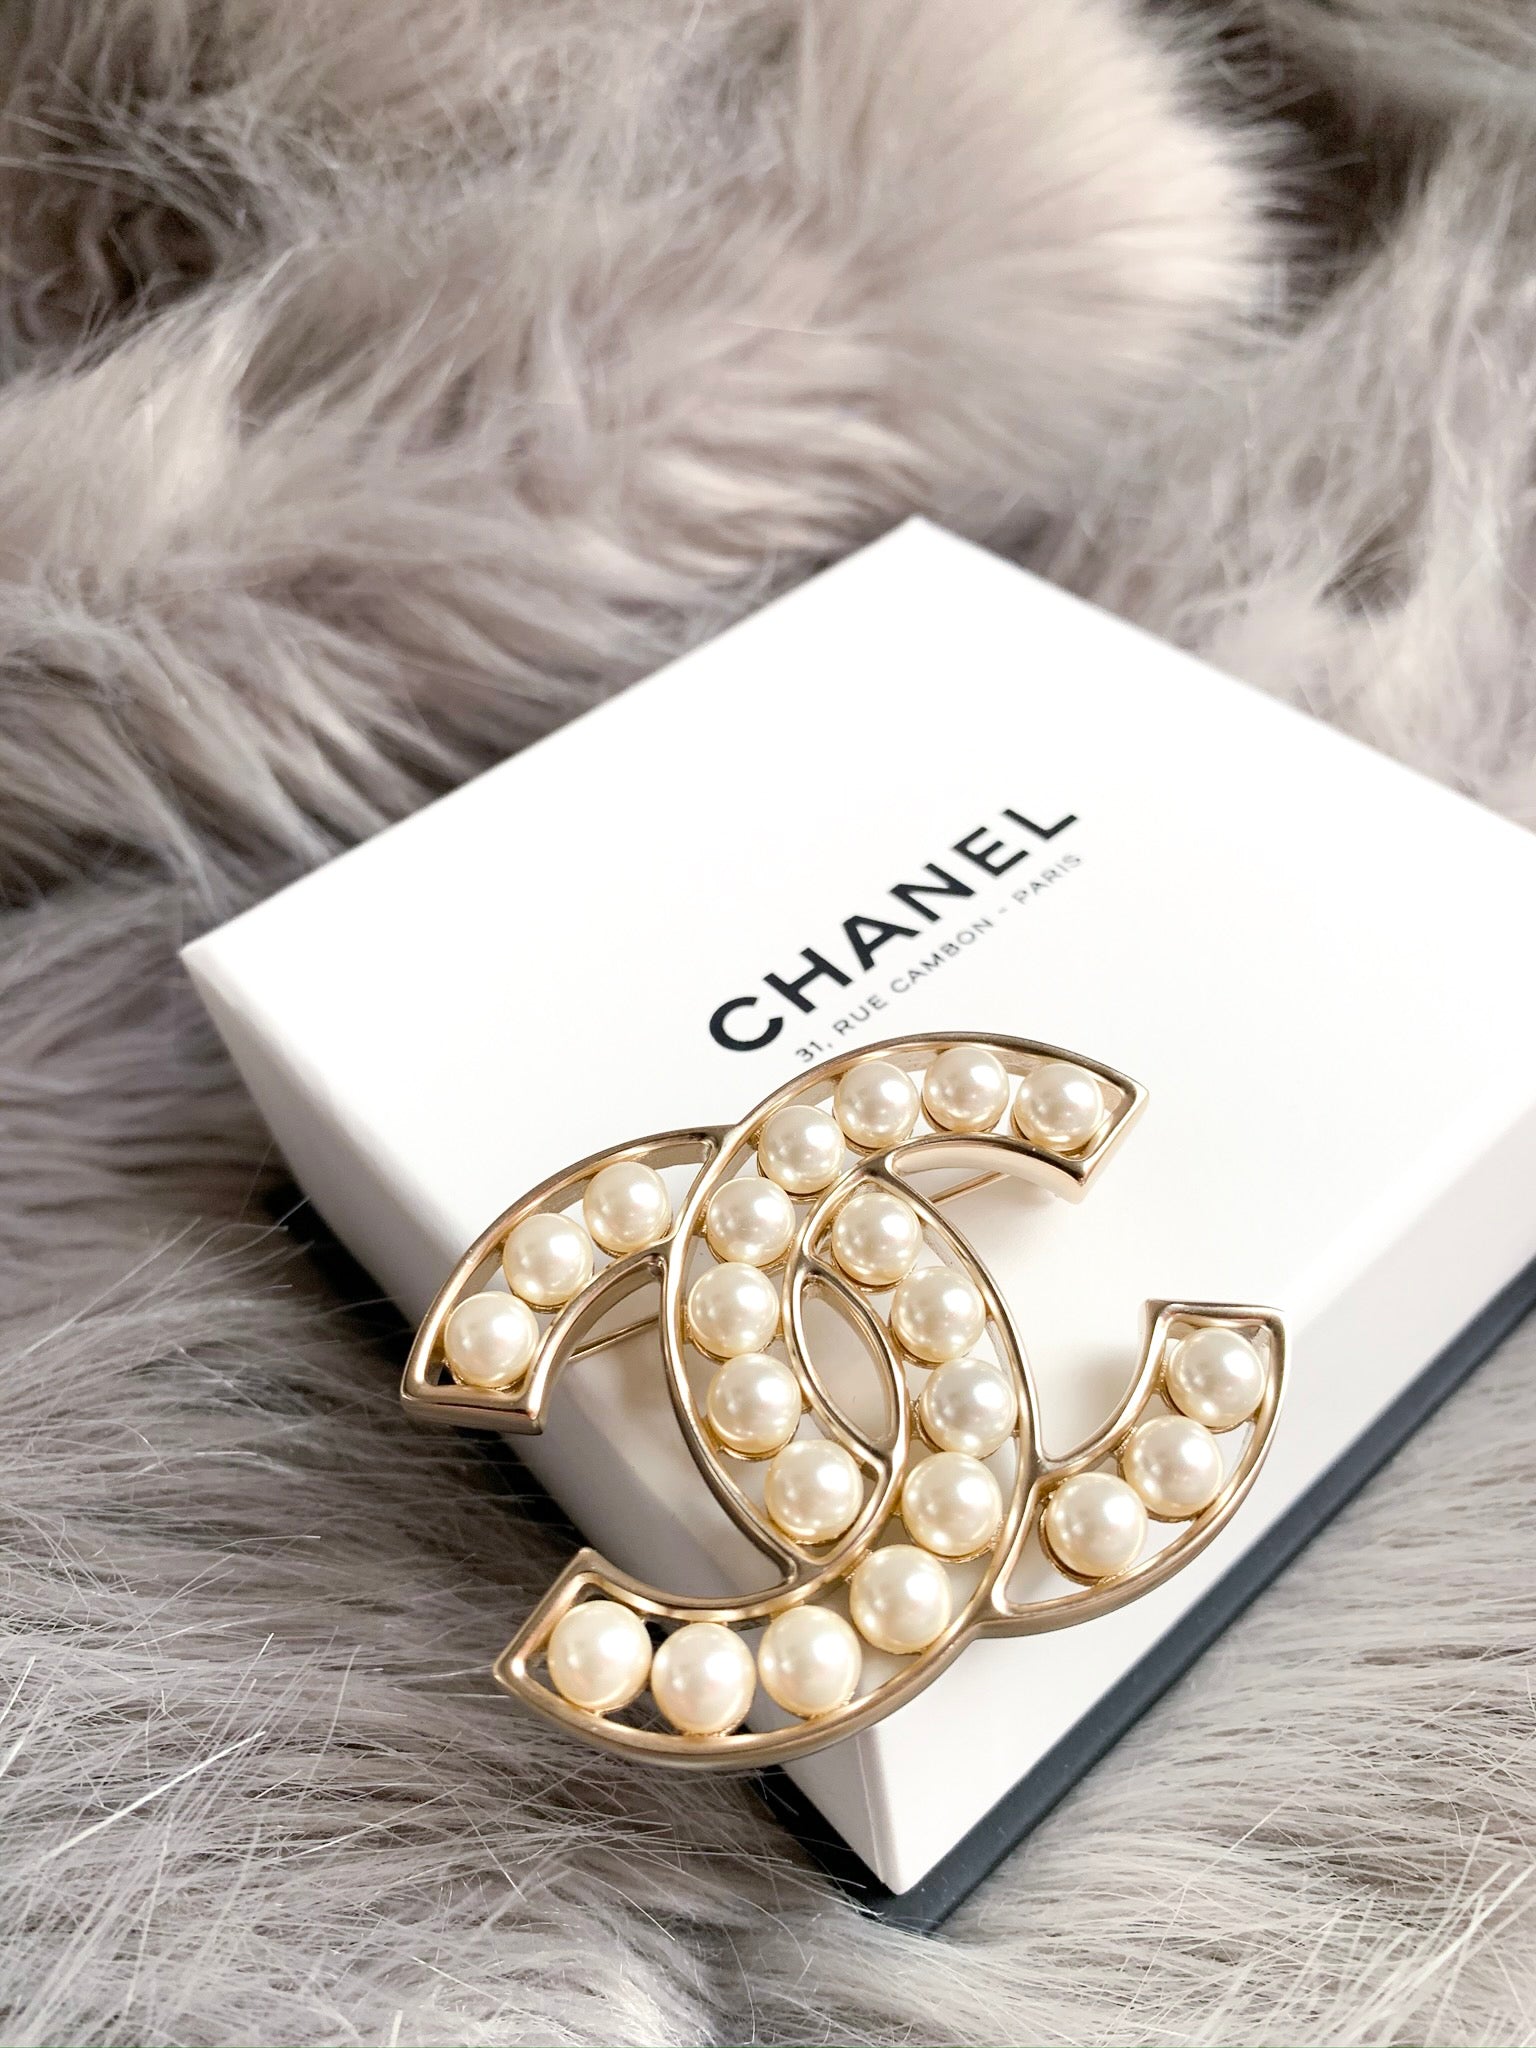 Chanel rare brooch 31 rue Cambon Paris Chanel second hand Lysis